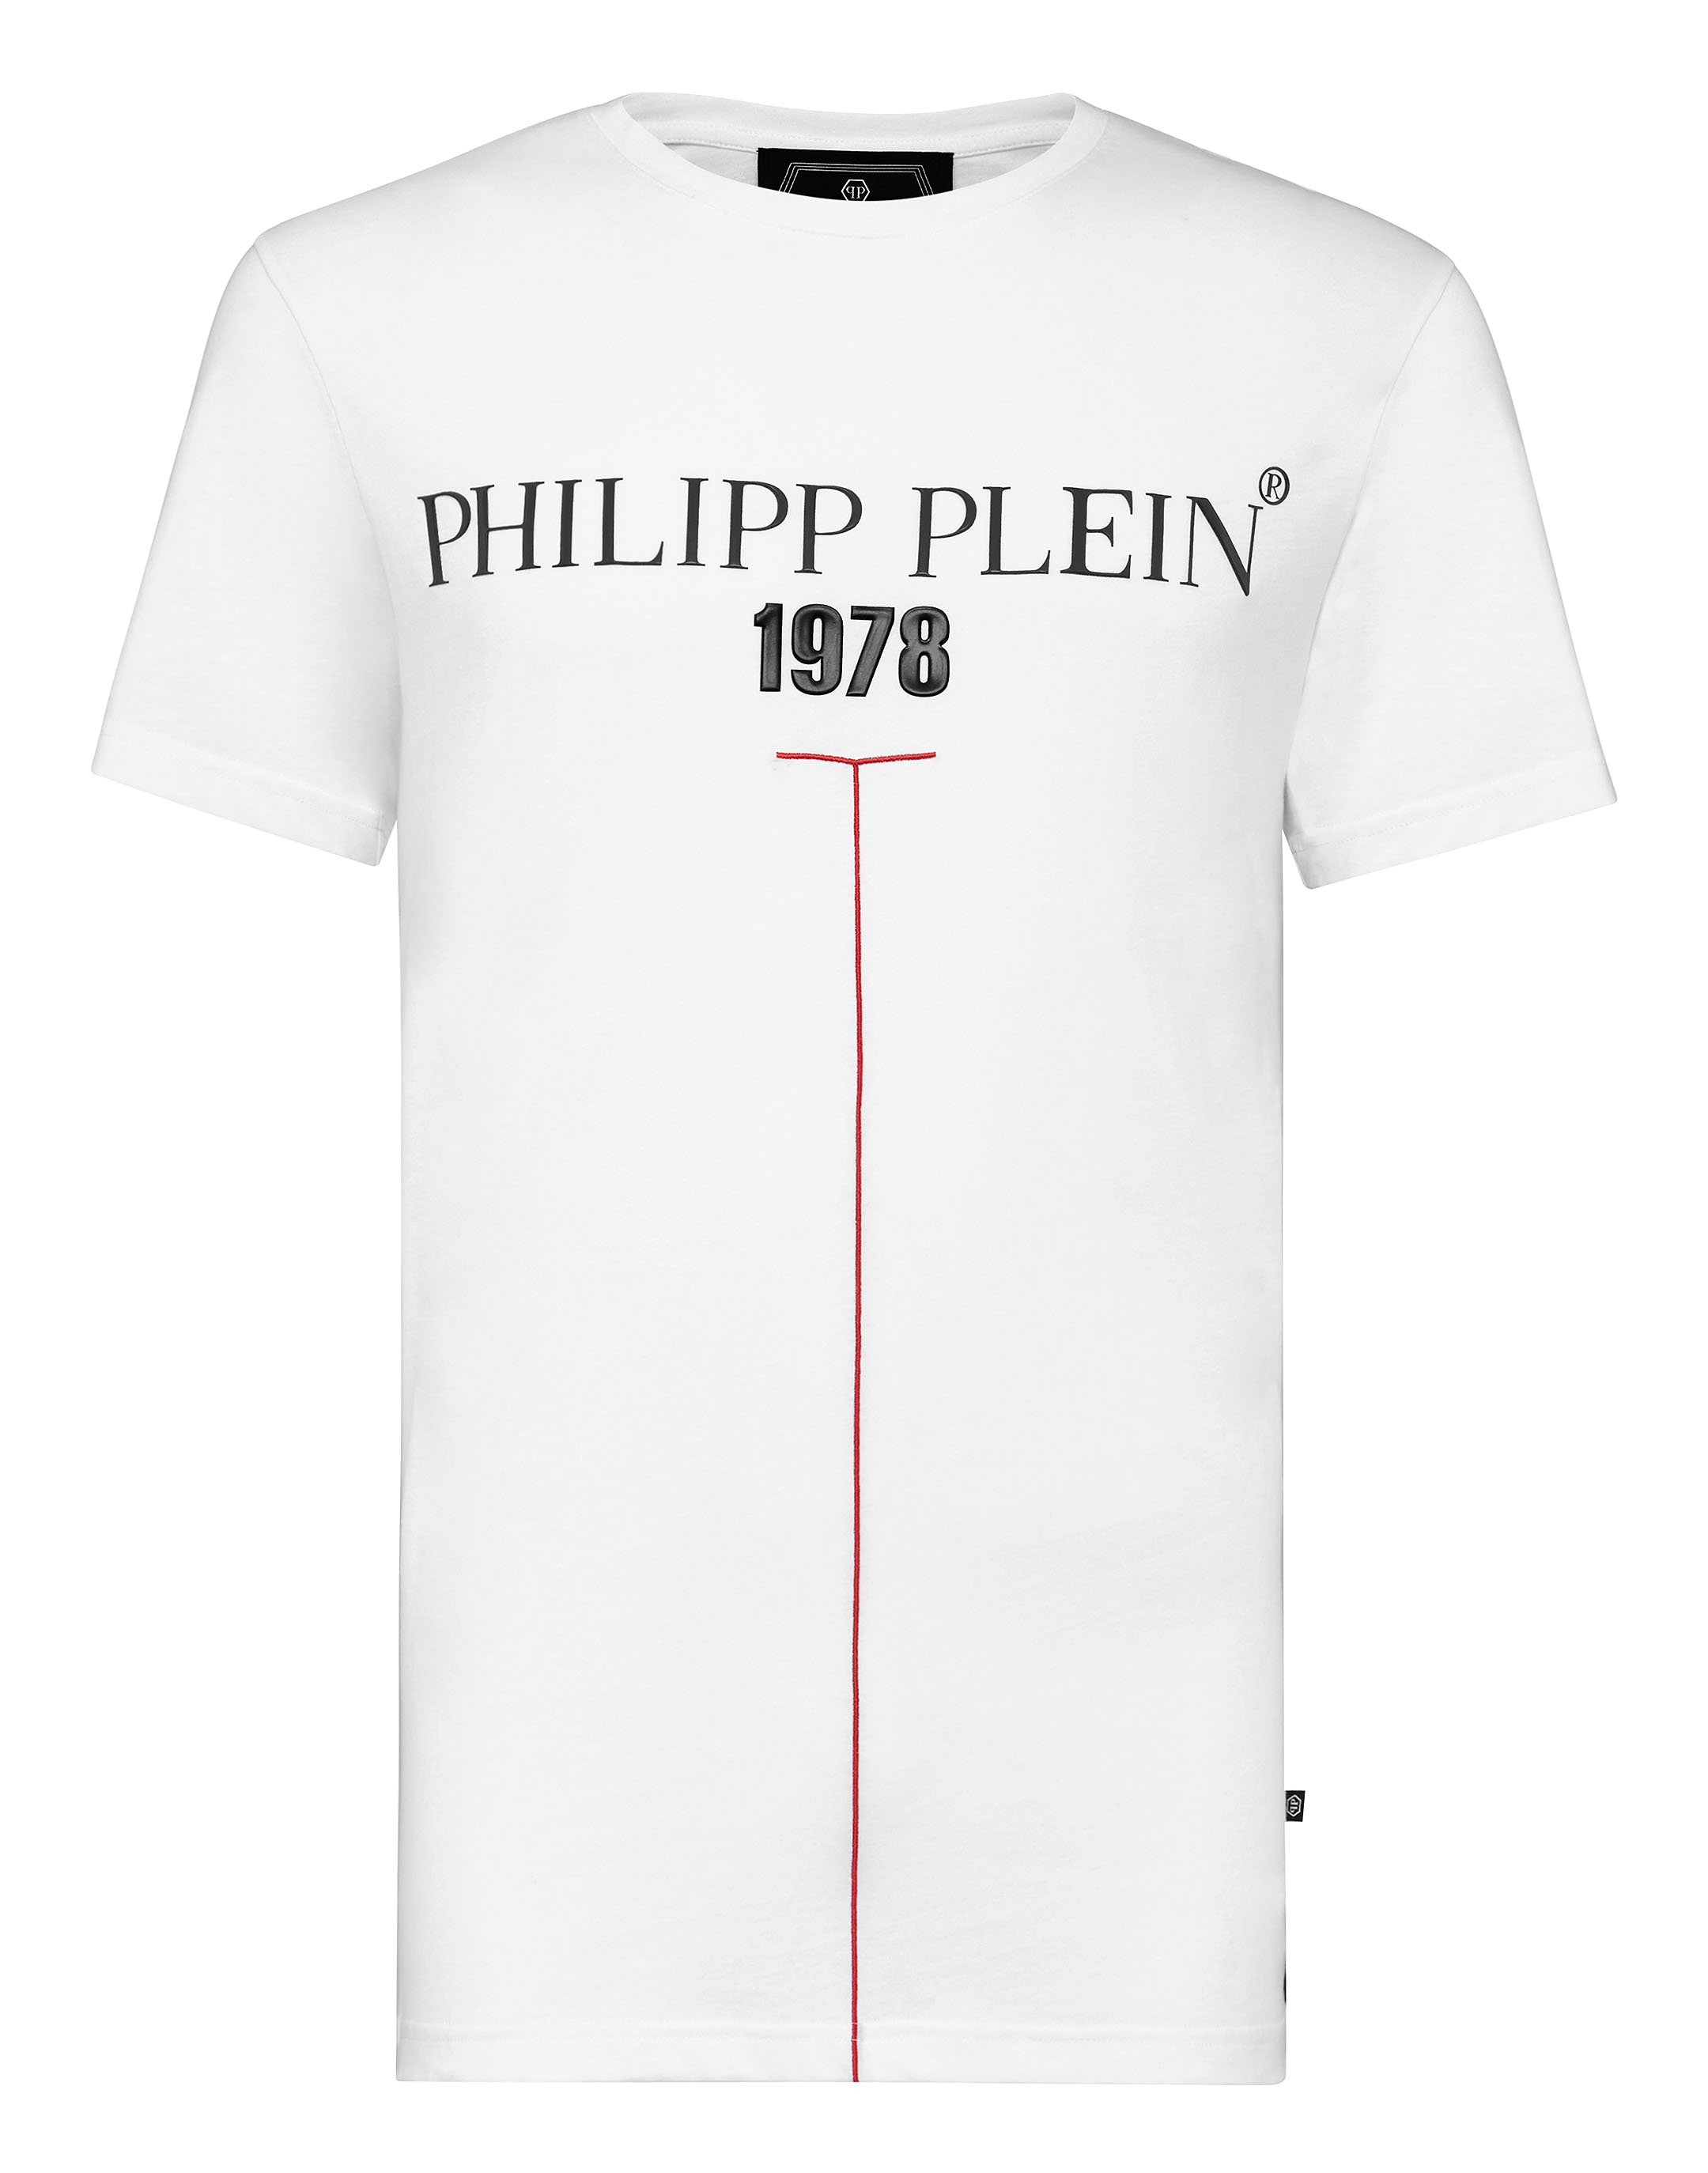 T-shirt Platinum Cut Round Neck PP 1978 | Philipp Plein Outlet